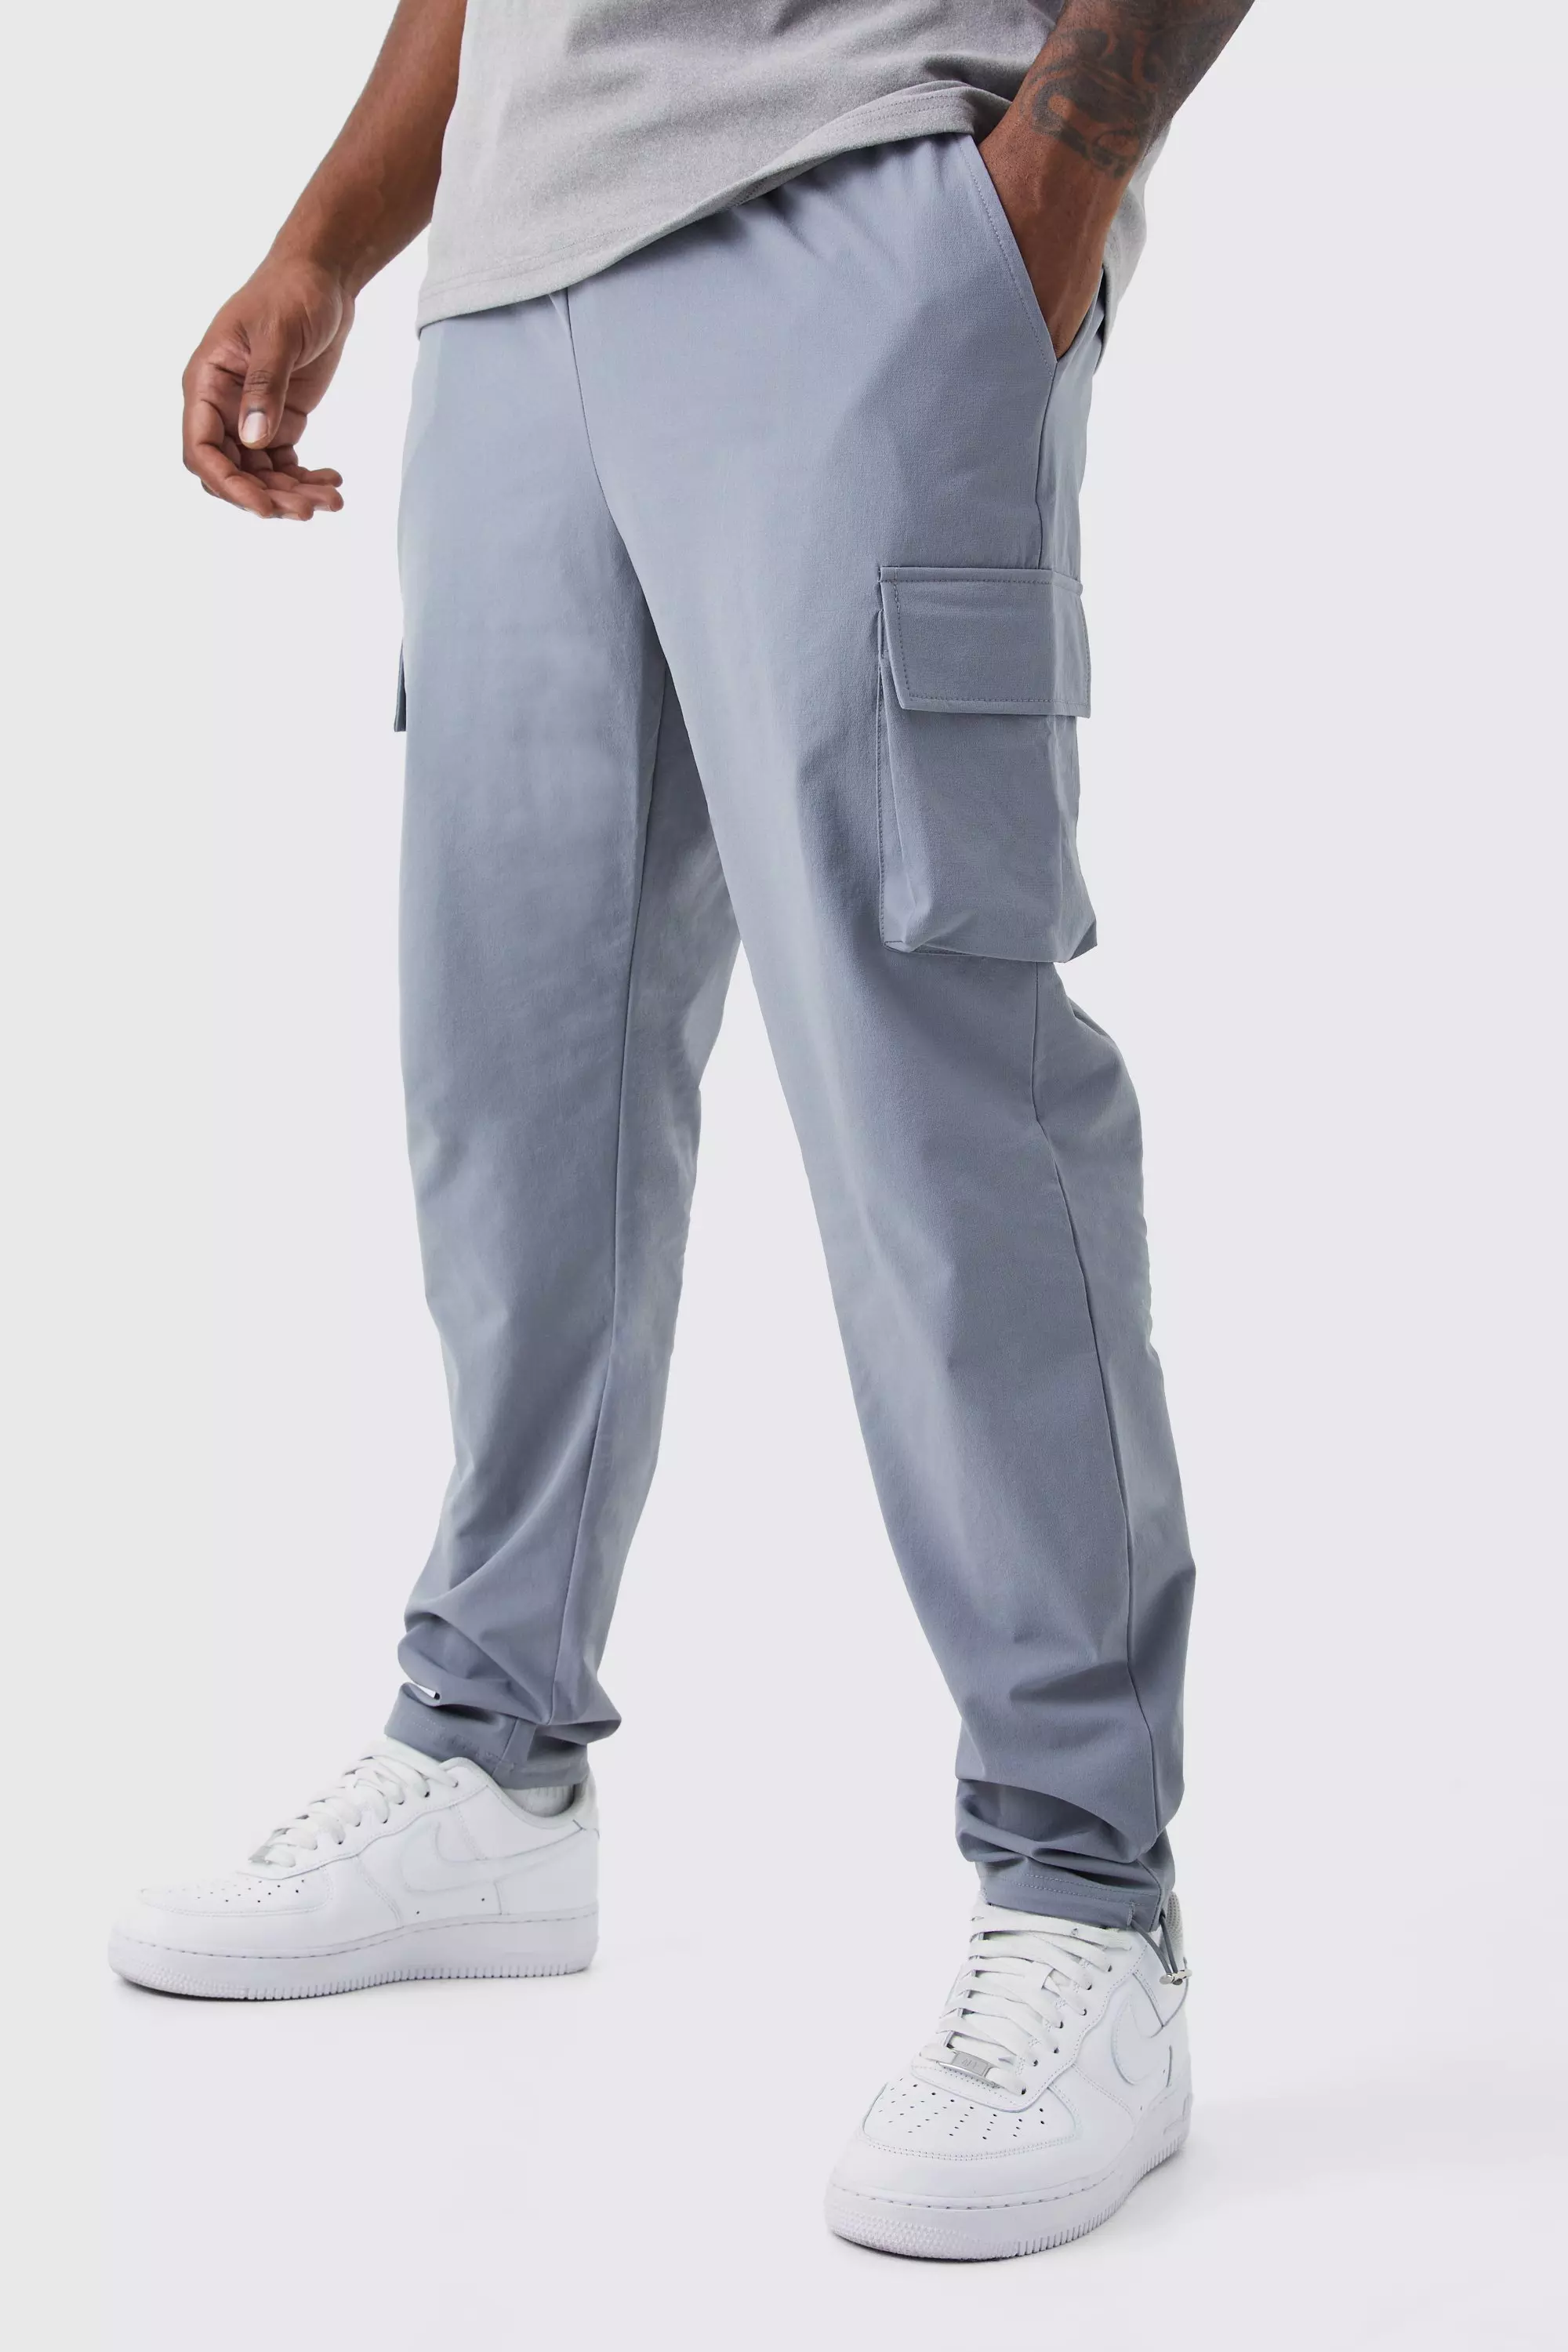 Plus Elastic Lightweight Stretch Skinny Cargo Pants Light grey